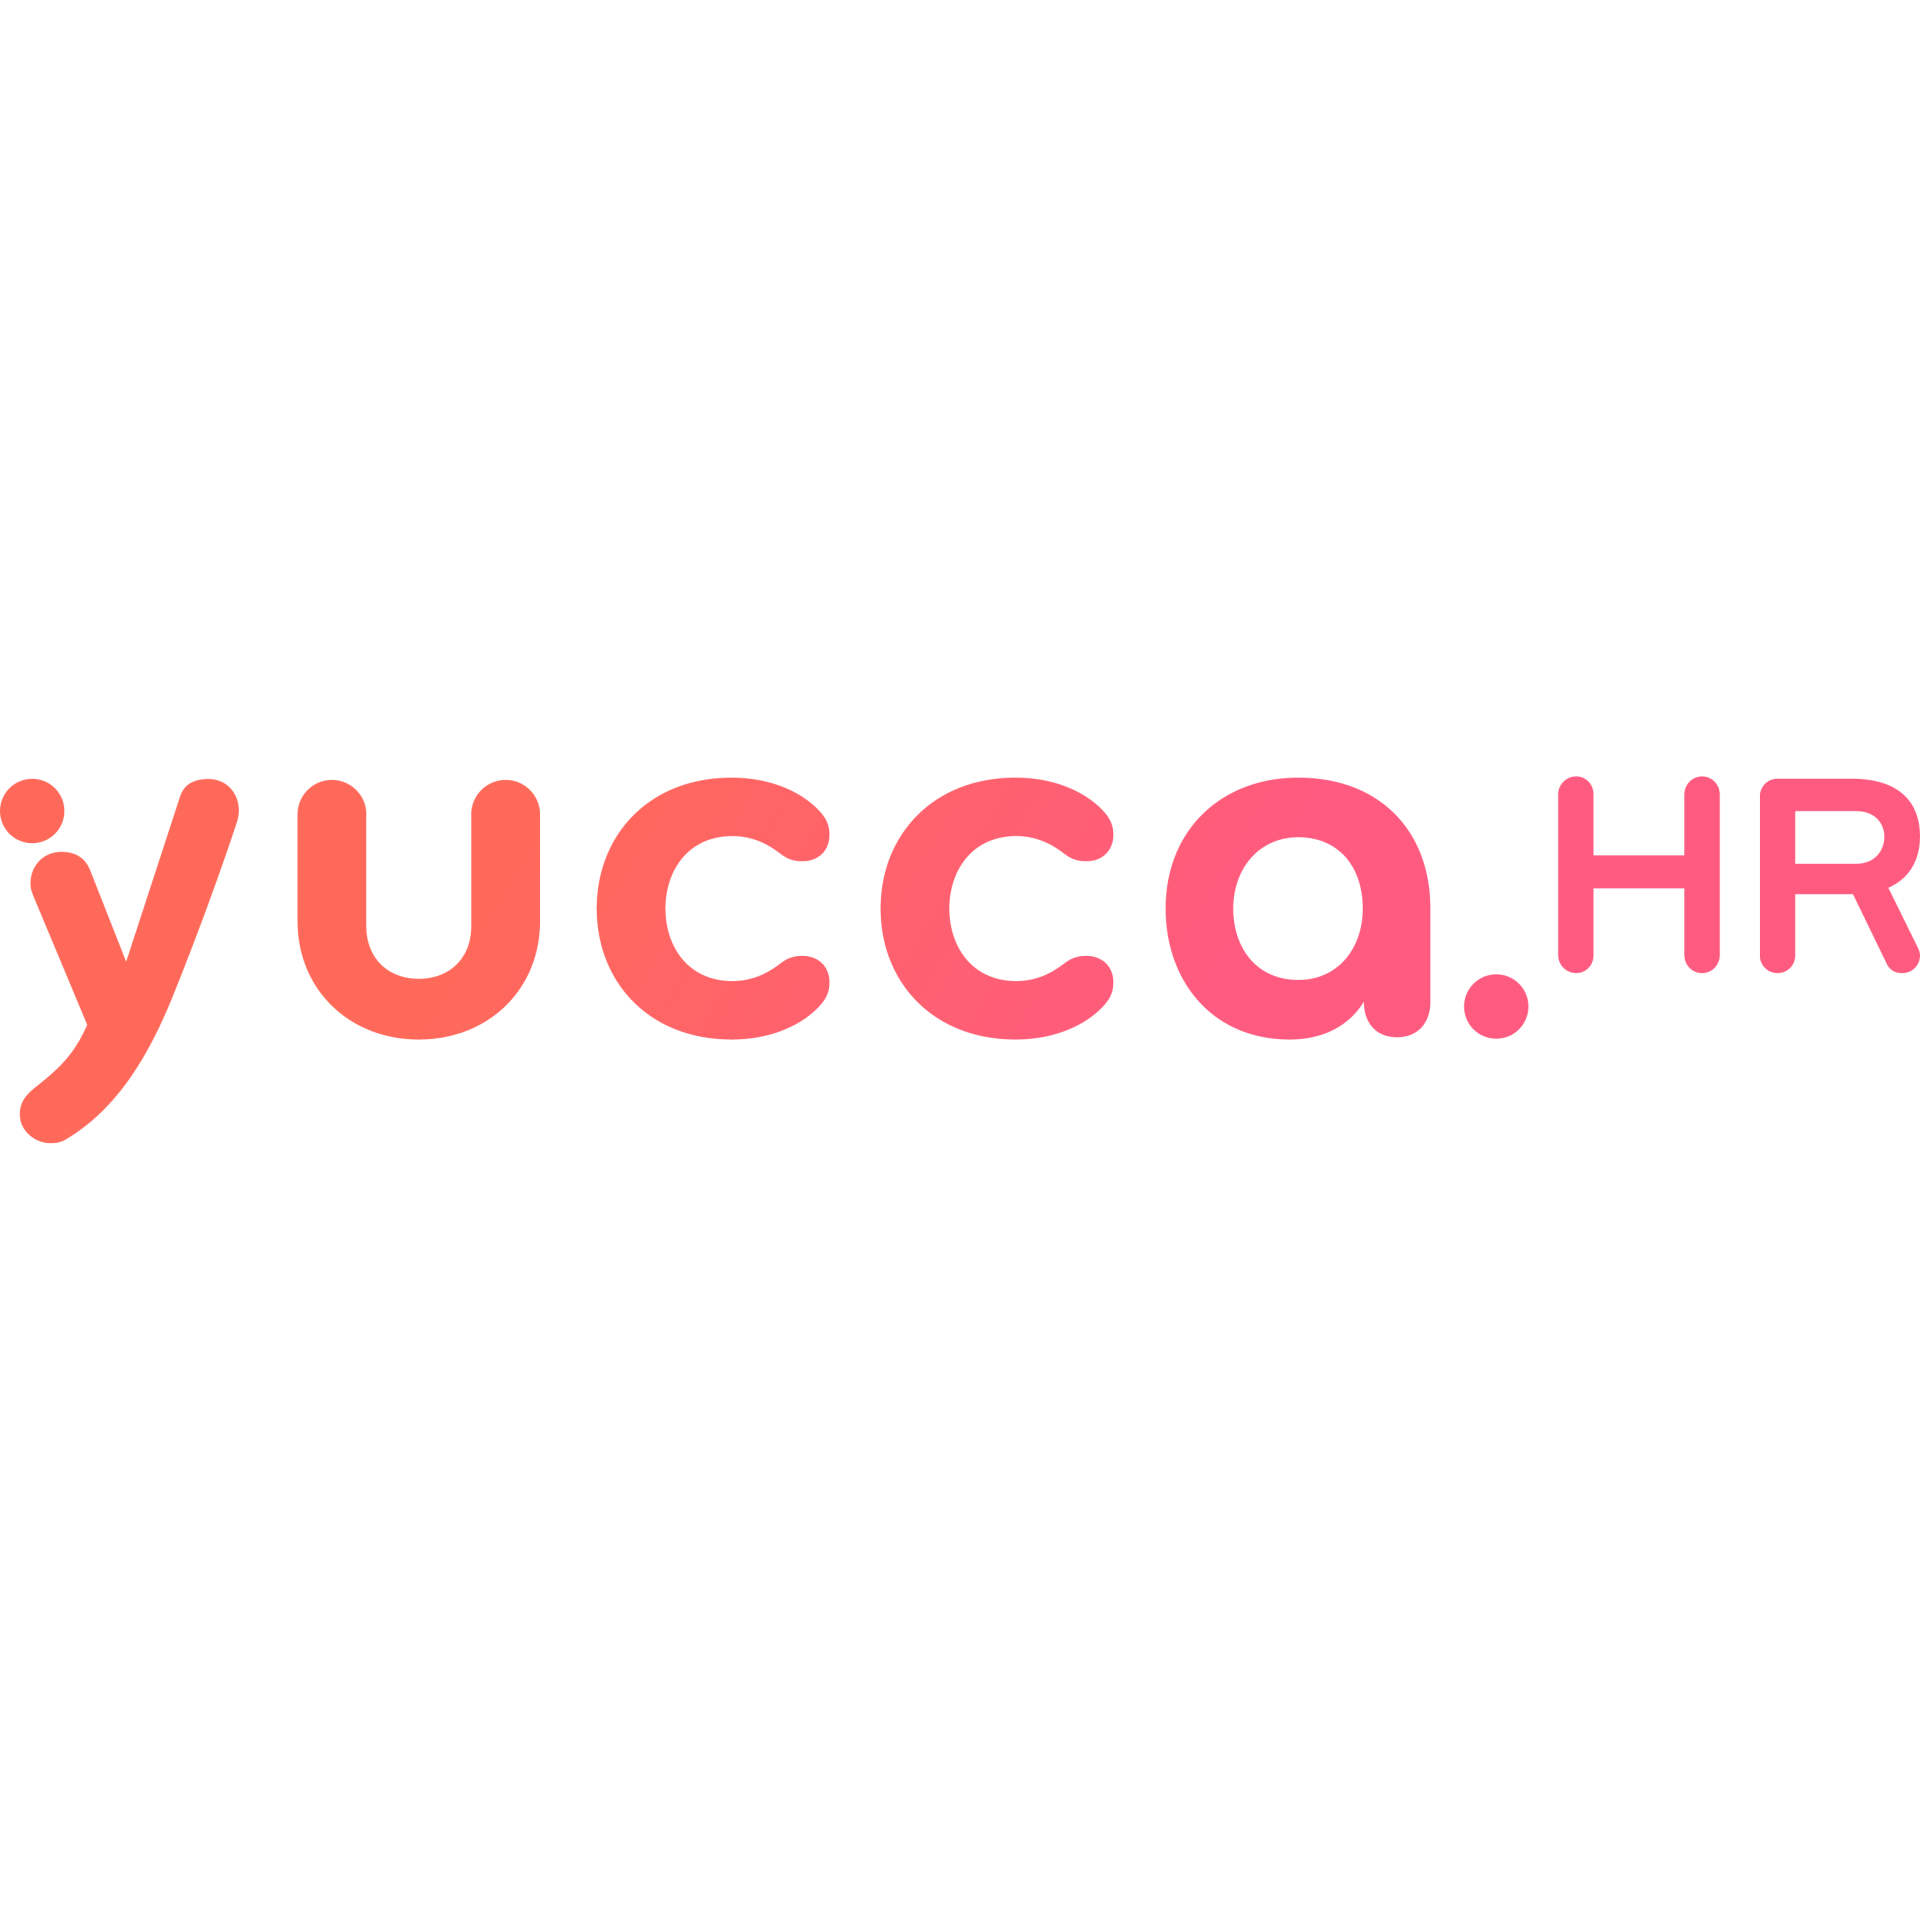 yuccahr